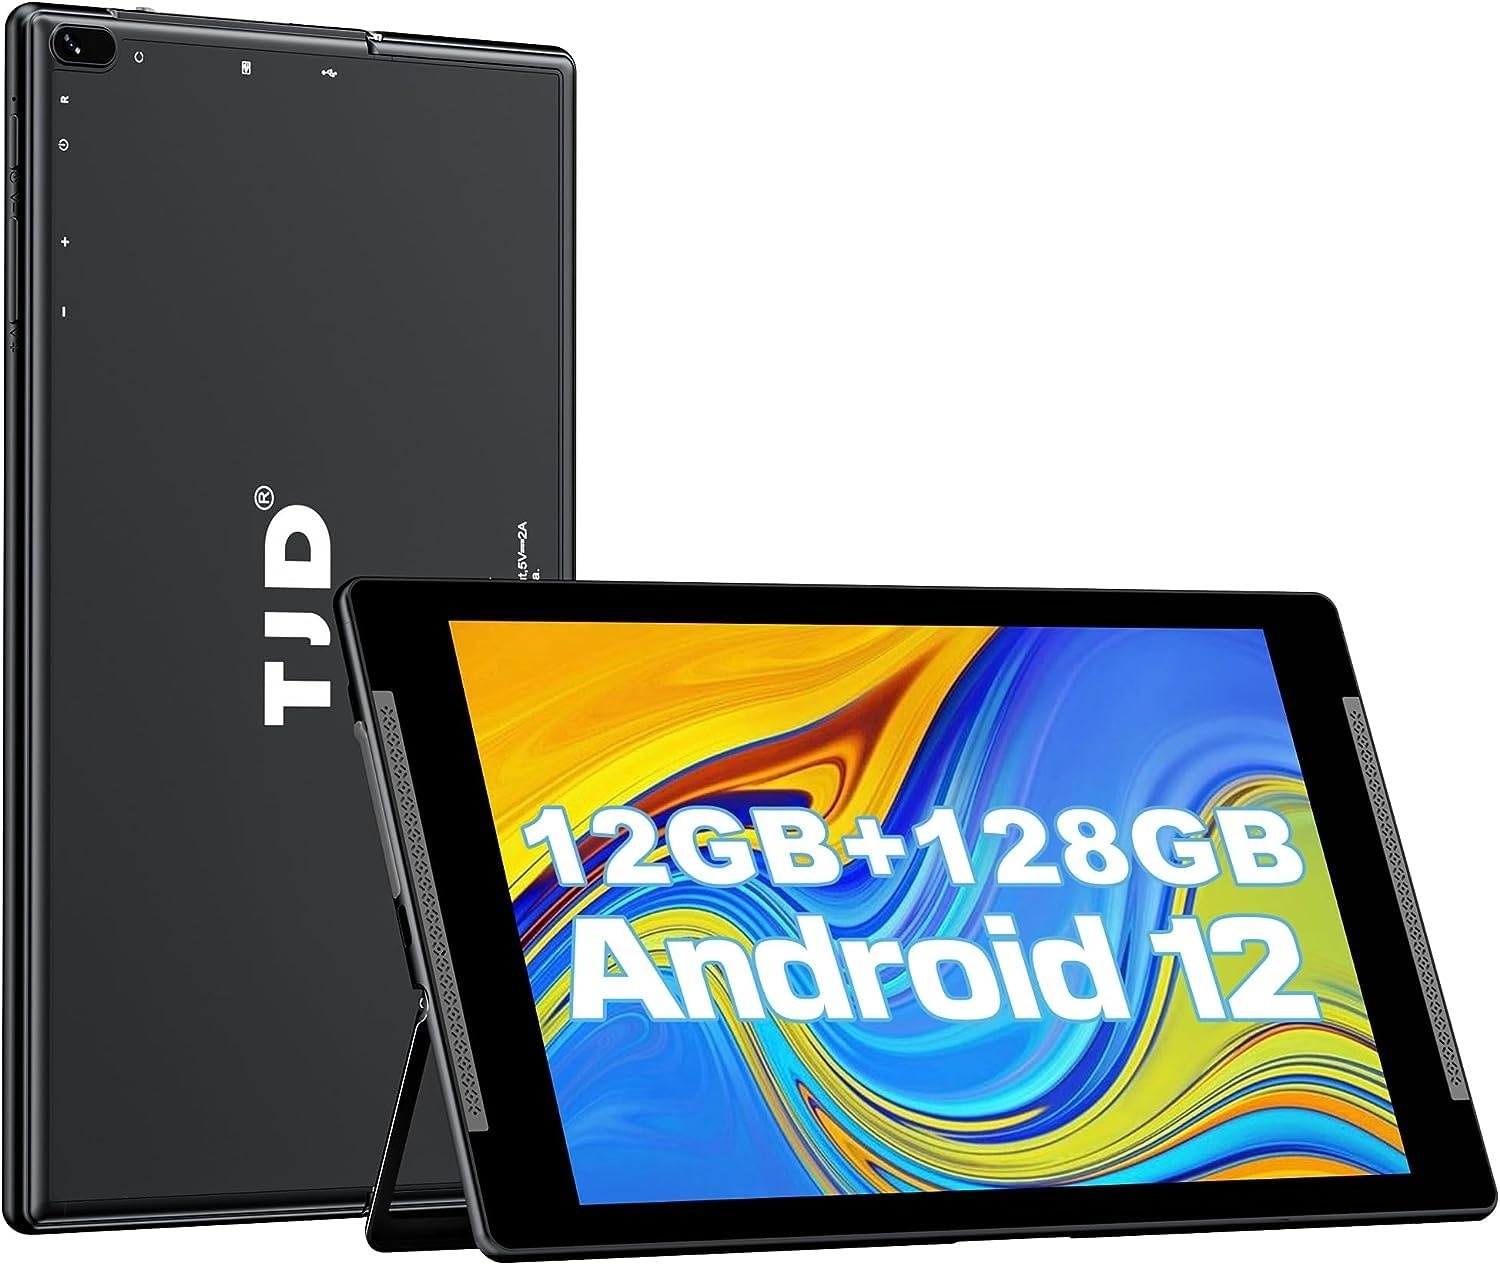 Android 12 Tablet 10,1 Zoll, 12GB RAM,128GB ROM(512GB Erweiterbarer Speicher), IPS Full FHD Touchscreen, 8MP+2MP Kameras,Wi-Fi,Bluetooth,6000mAh,Google GMS,2 Lautsprecher(Schwarz)